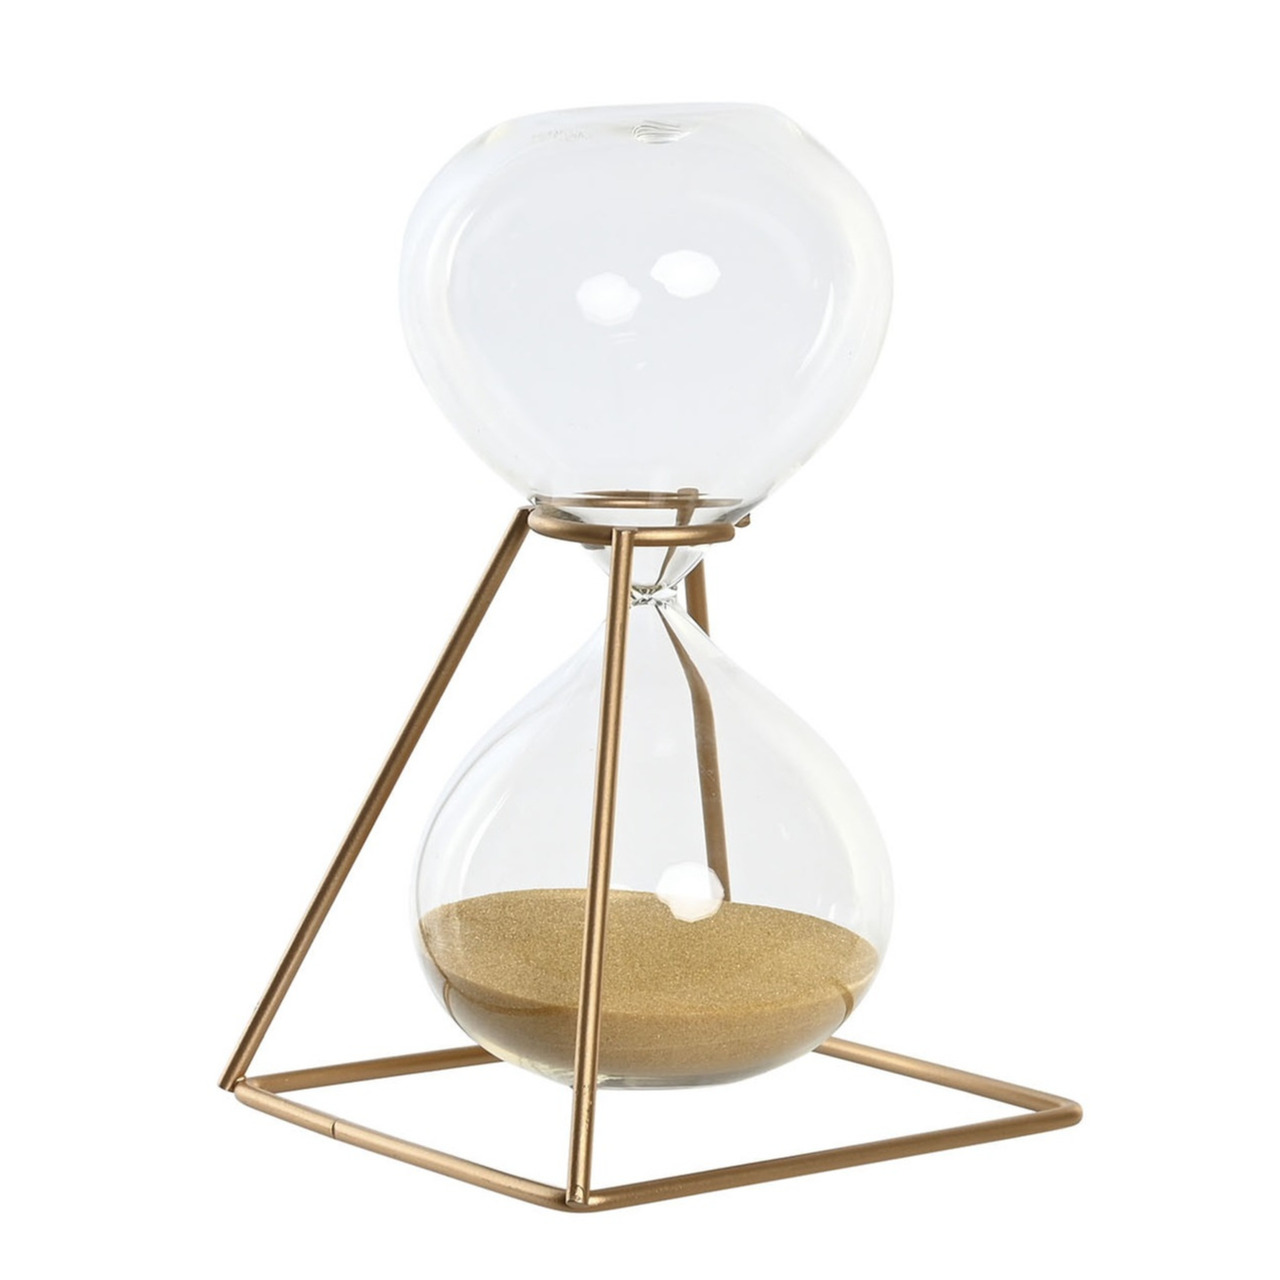 Zandloper cilinder - decoratie of tijdsmeting - 30 minuten goud zand - H18 cm - glas -